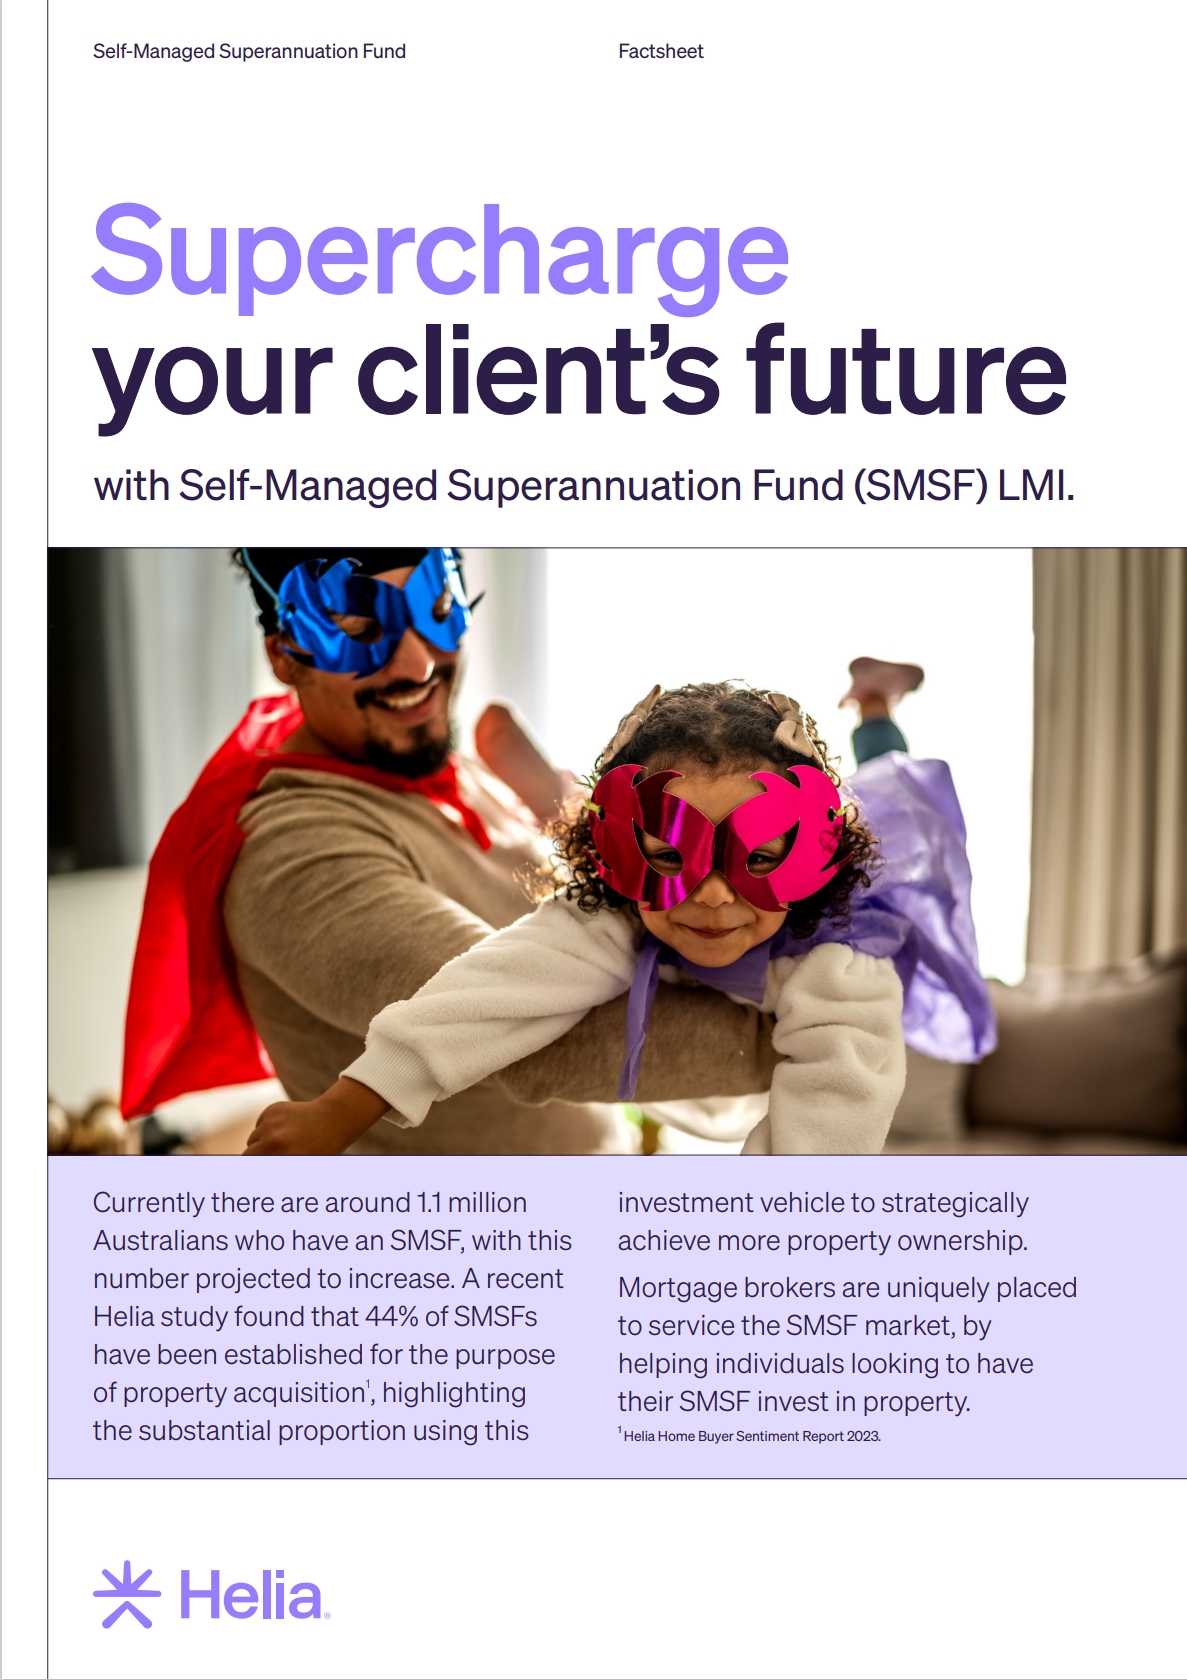 Self-managed super fund (SMSF) LMI factsheet 